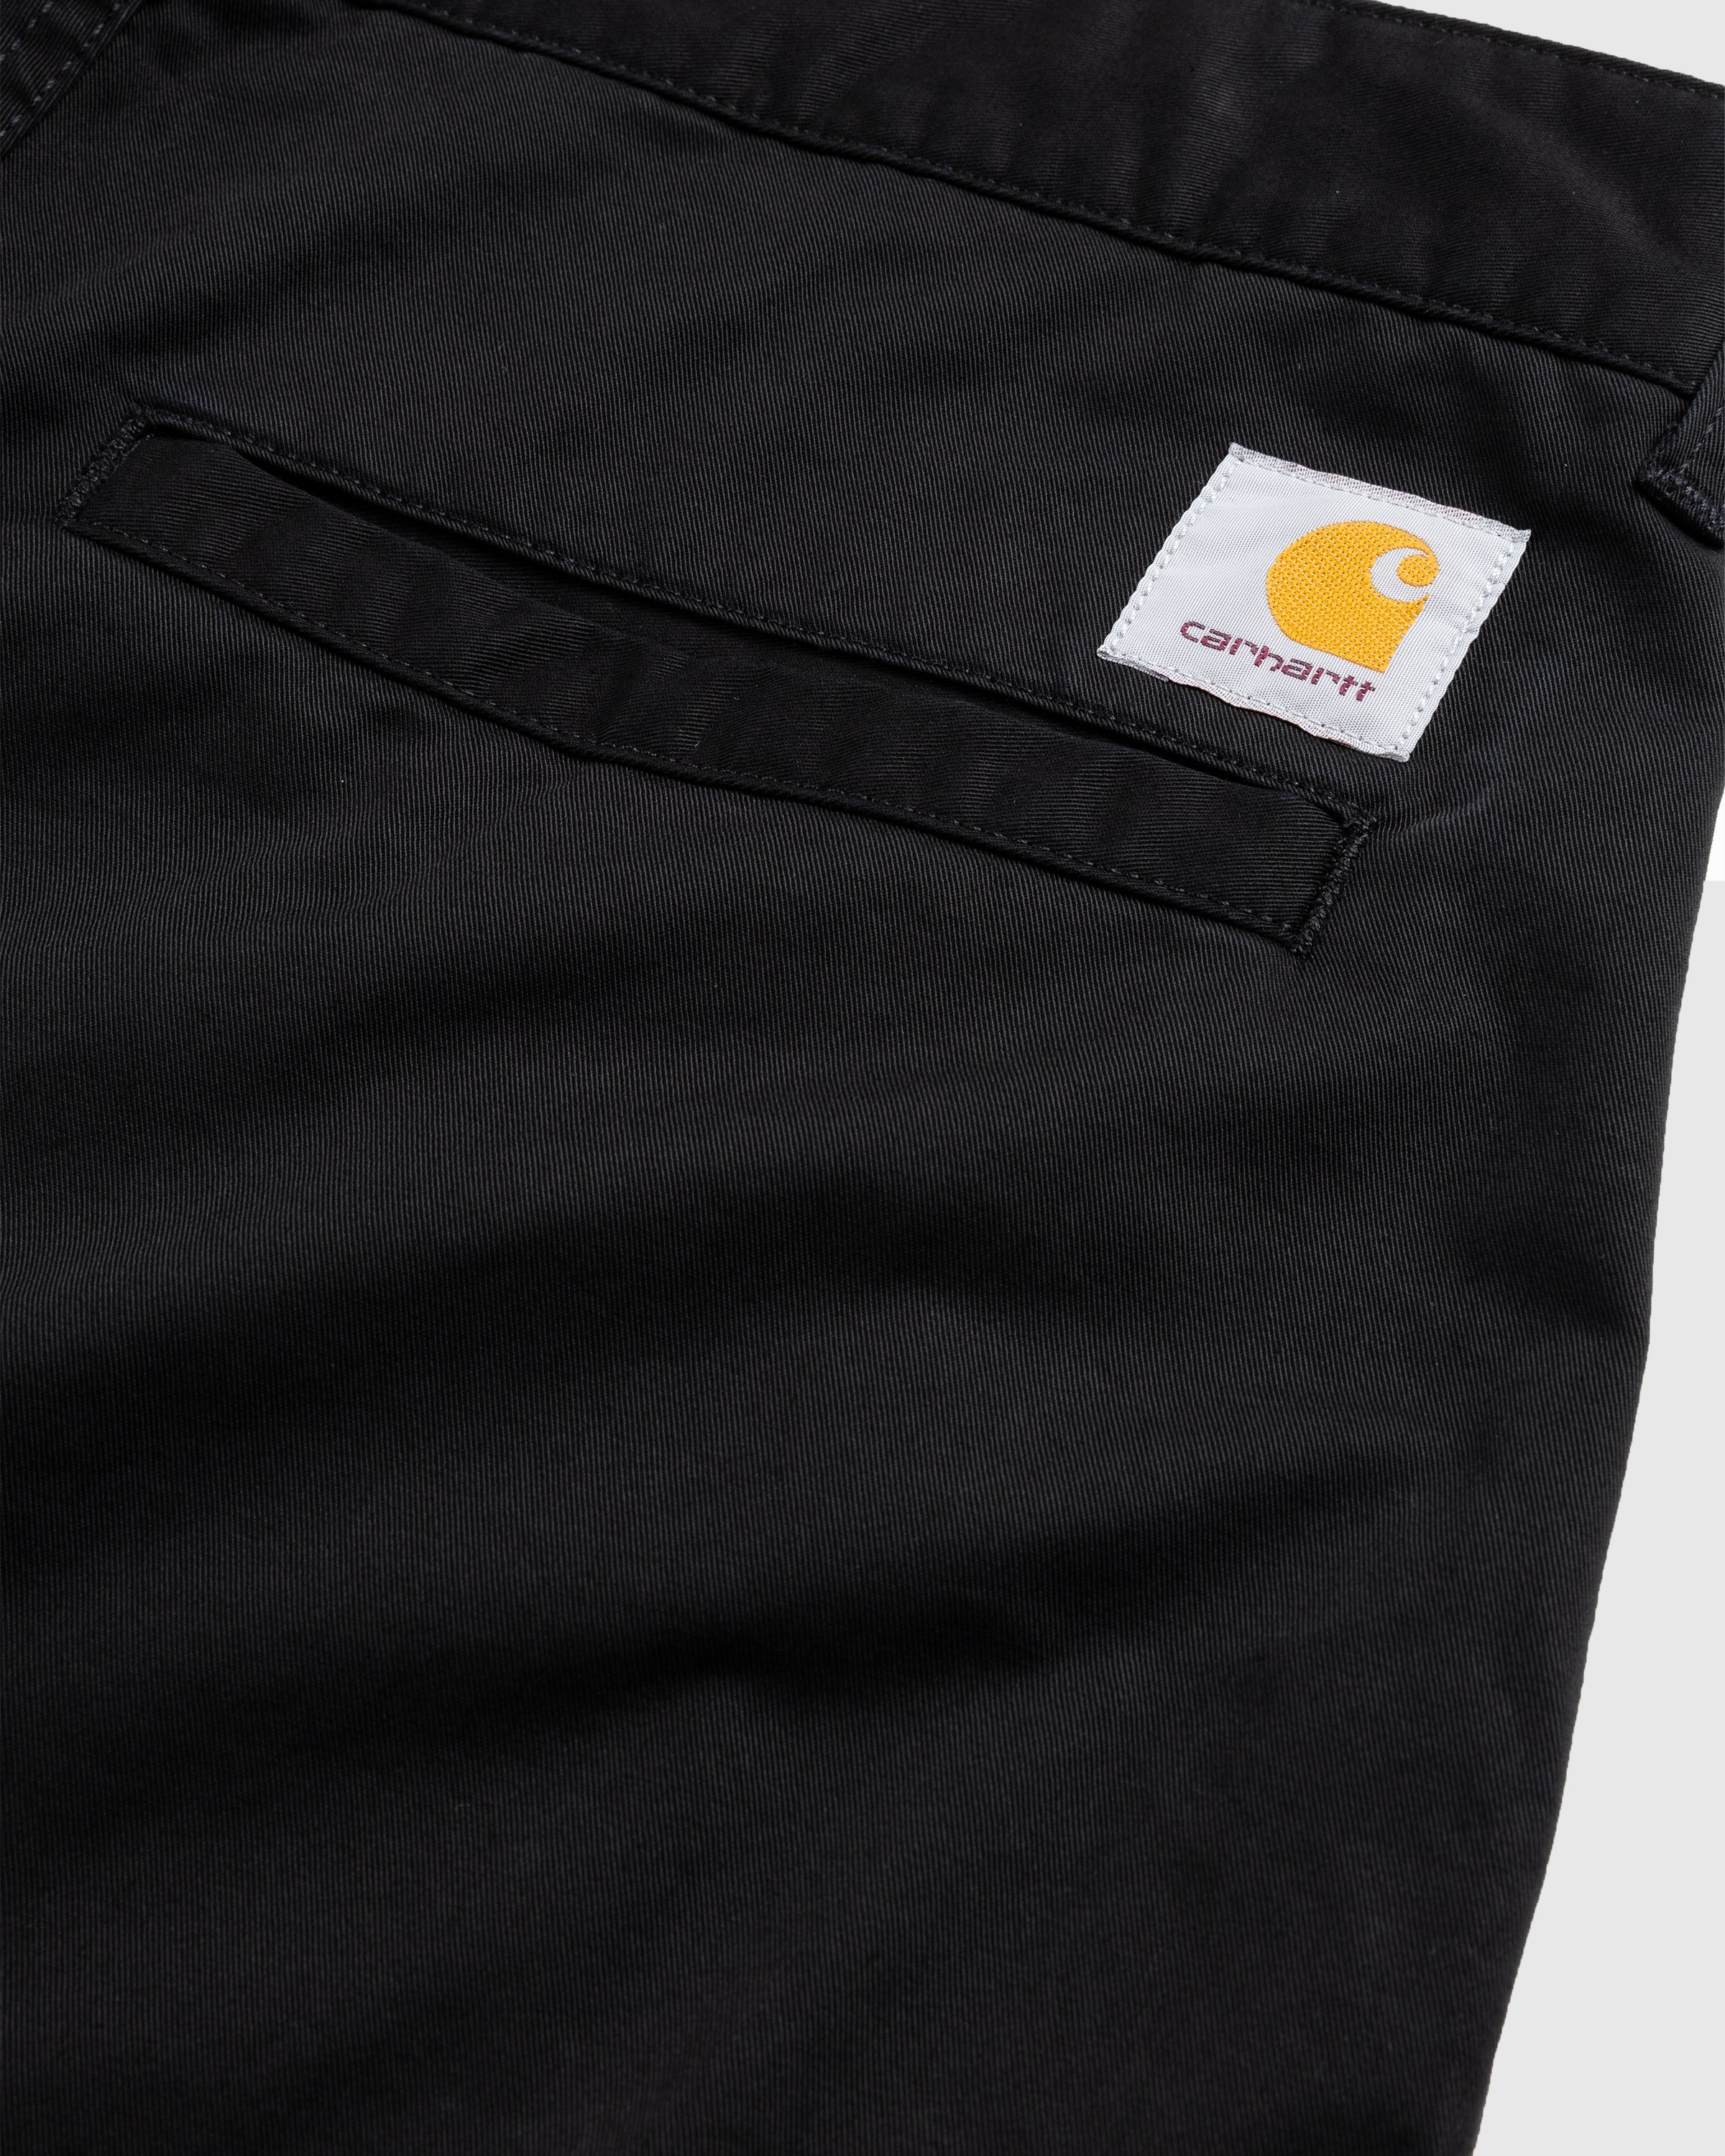 Carhartt WIP - Colston Pant Stonewashed Black - Clothing - Black - Image 6